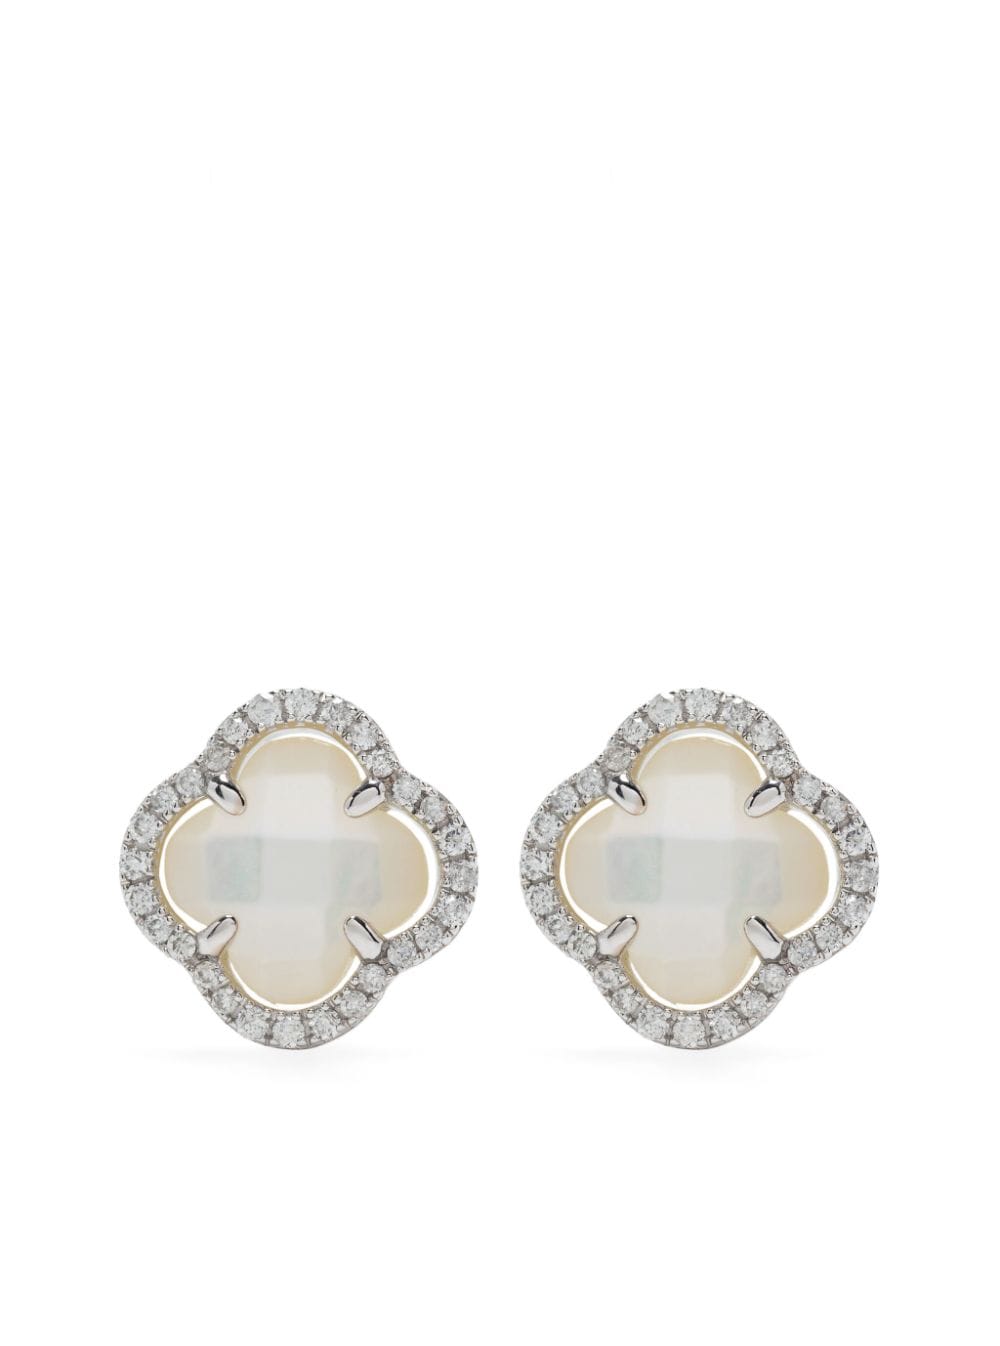 18kt white gold Victoria diamond stud earrings